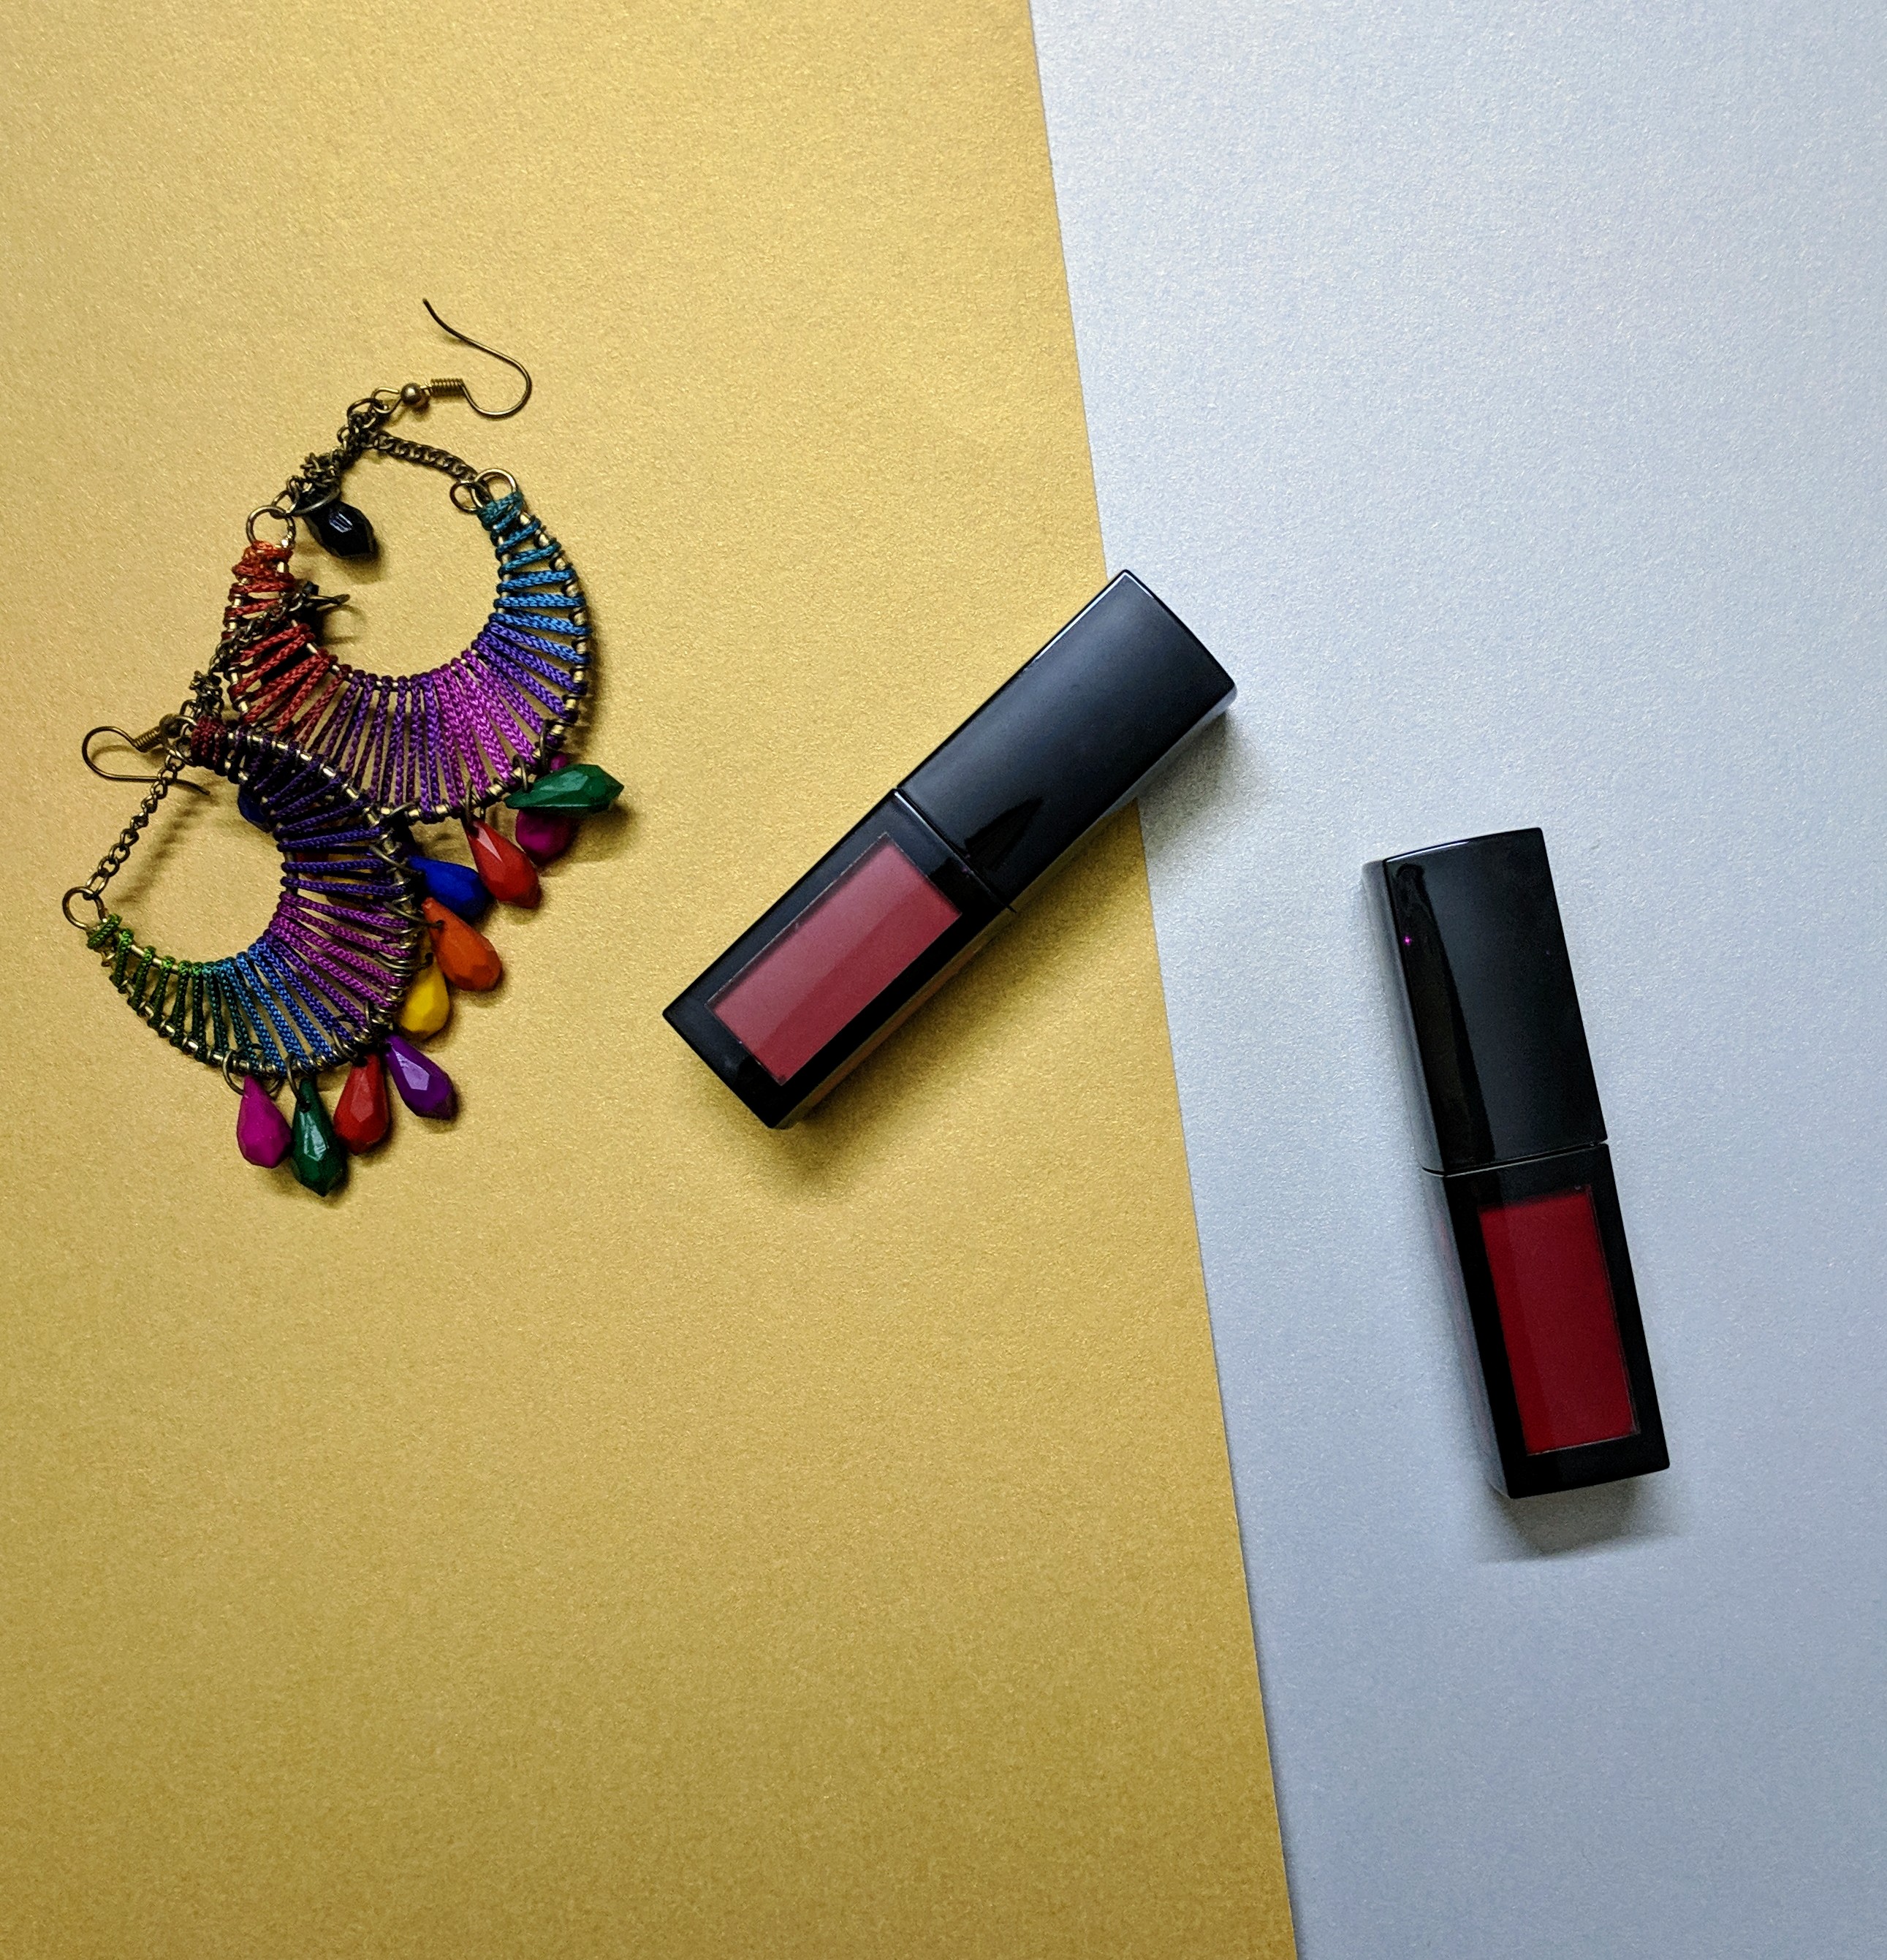 Nykaa Matte To Last Liquid Lipsticks (Dilli & Mishti)| Review & Swatches